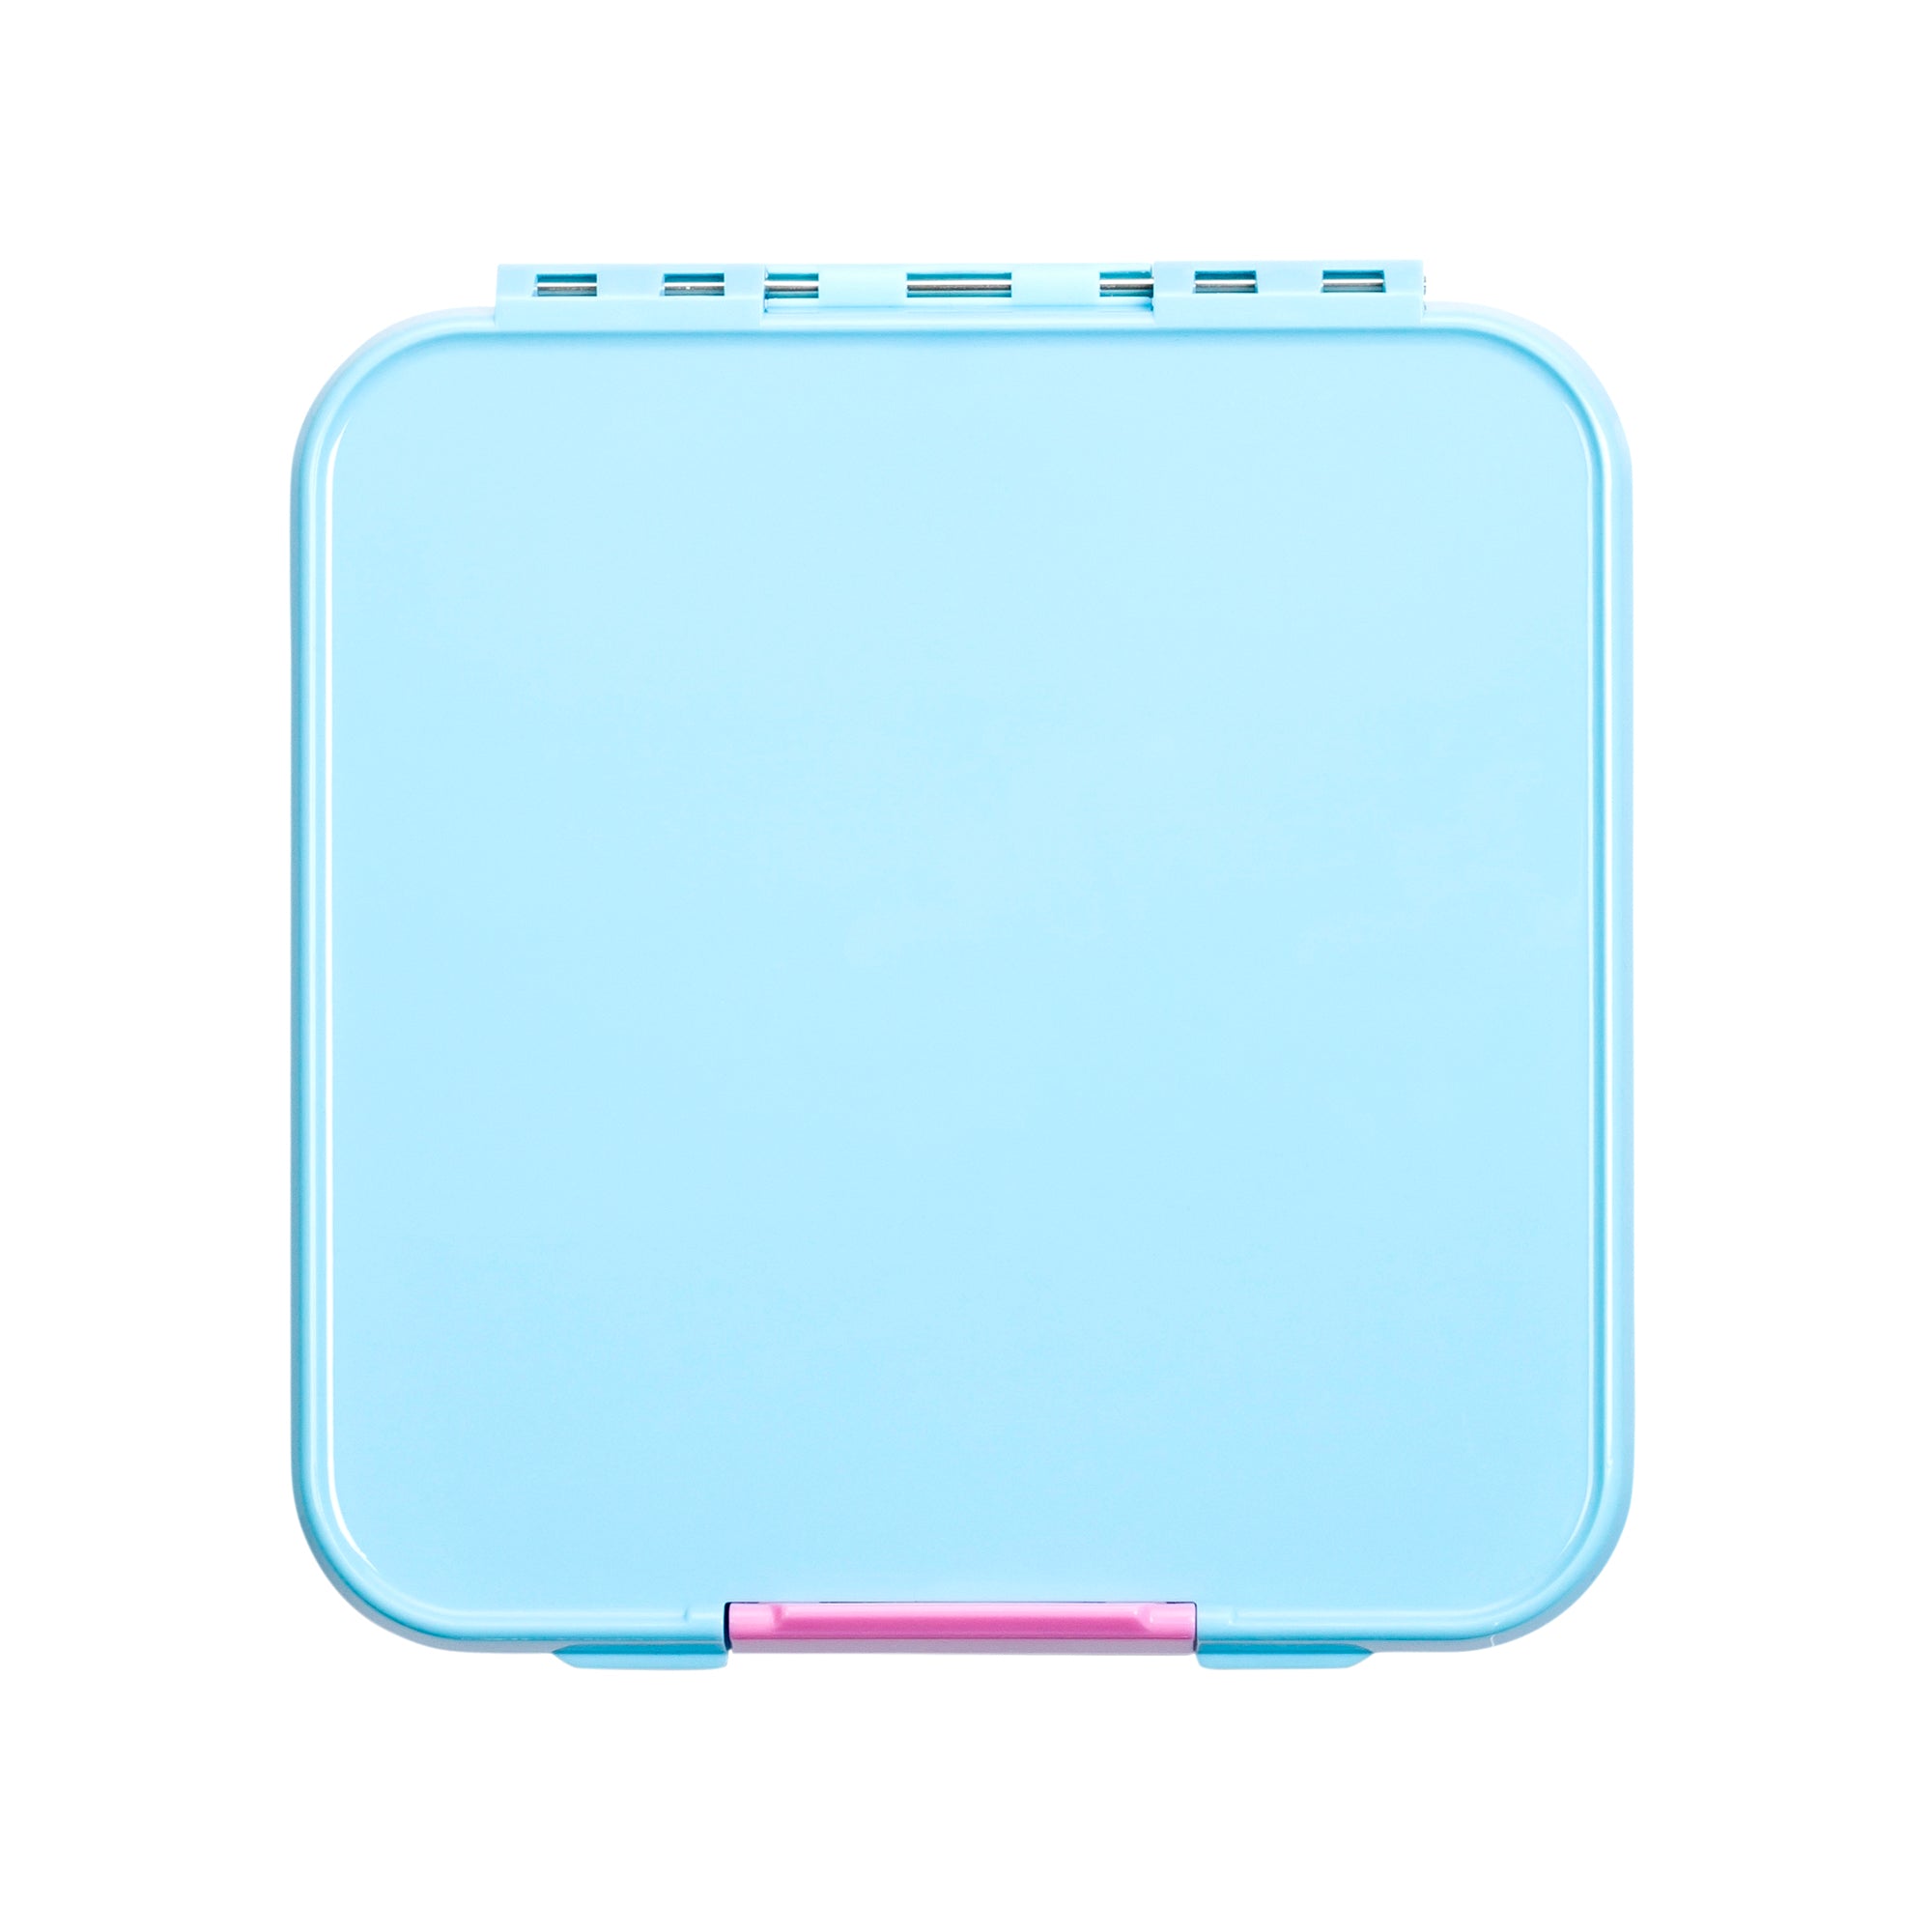 Bento Five - Little Lunch Box Co - svetlo modrý (ozdob si podľa seba)